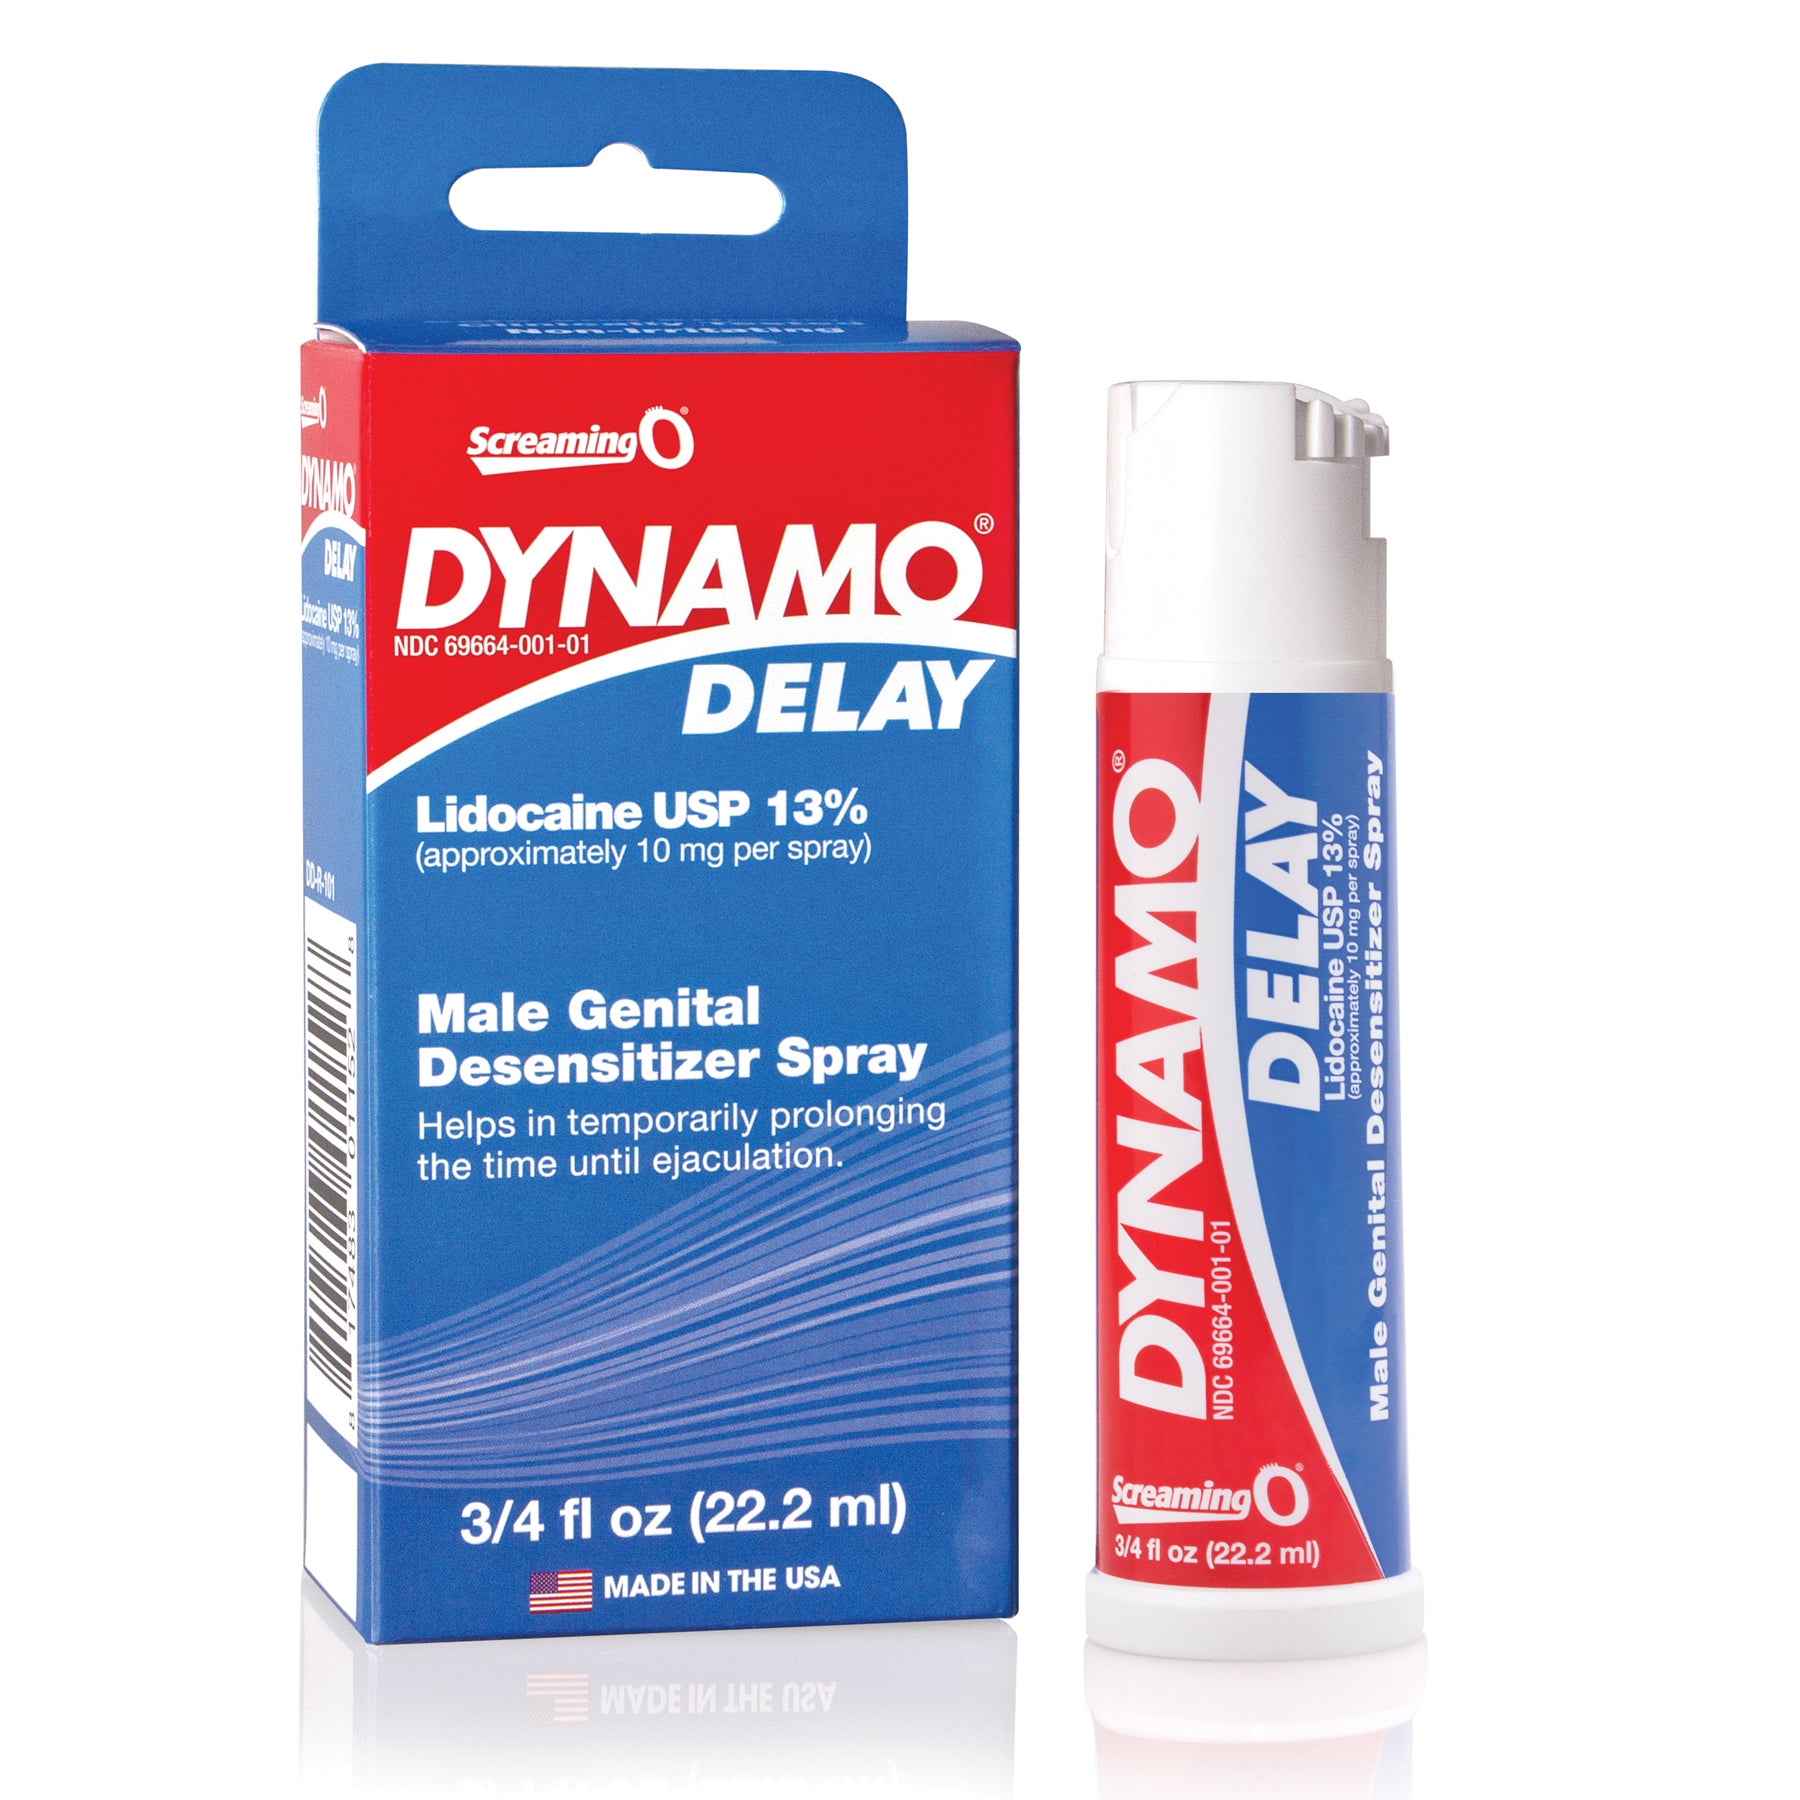 Dynamo Delay Male Genital Desensitizer Prolonging Spray Performance Enhancer